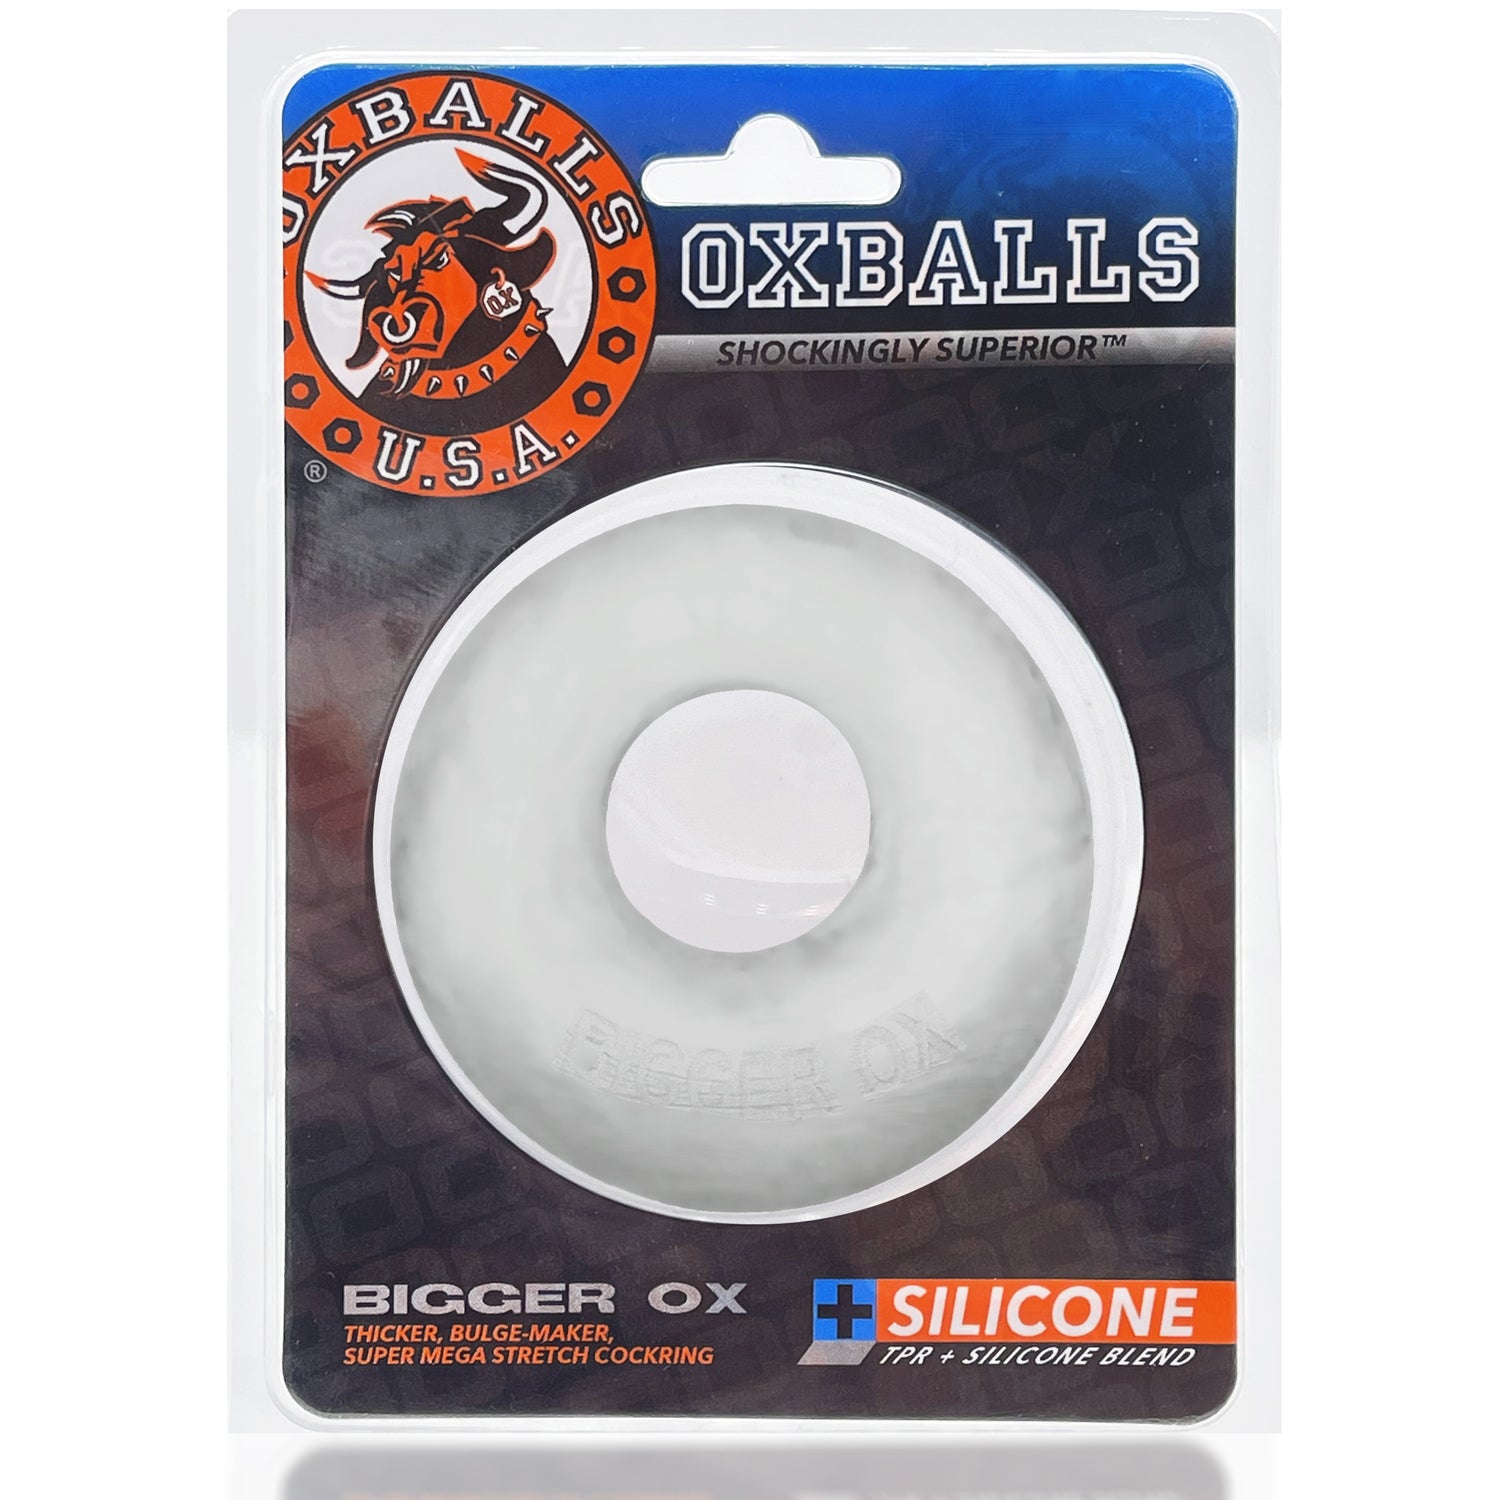 Oxballs BIGGER OX Cockring